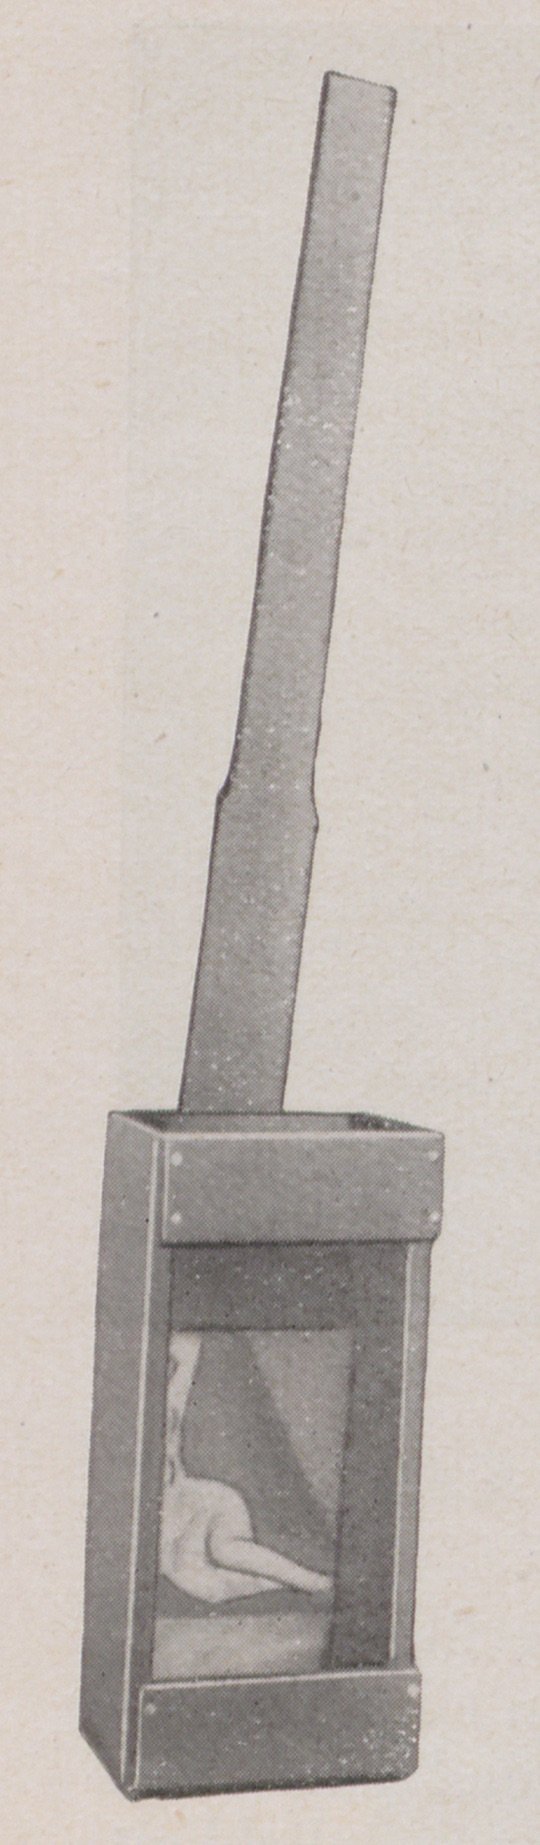 Abbildung eines Periskops (Magnus-Hirschfeld-Gesellschaft Public Domain Mark)